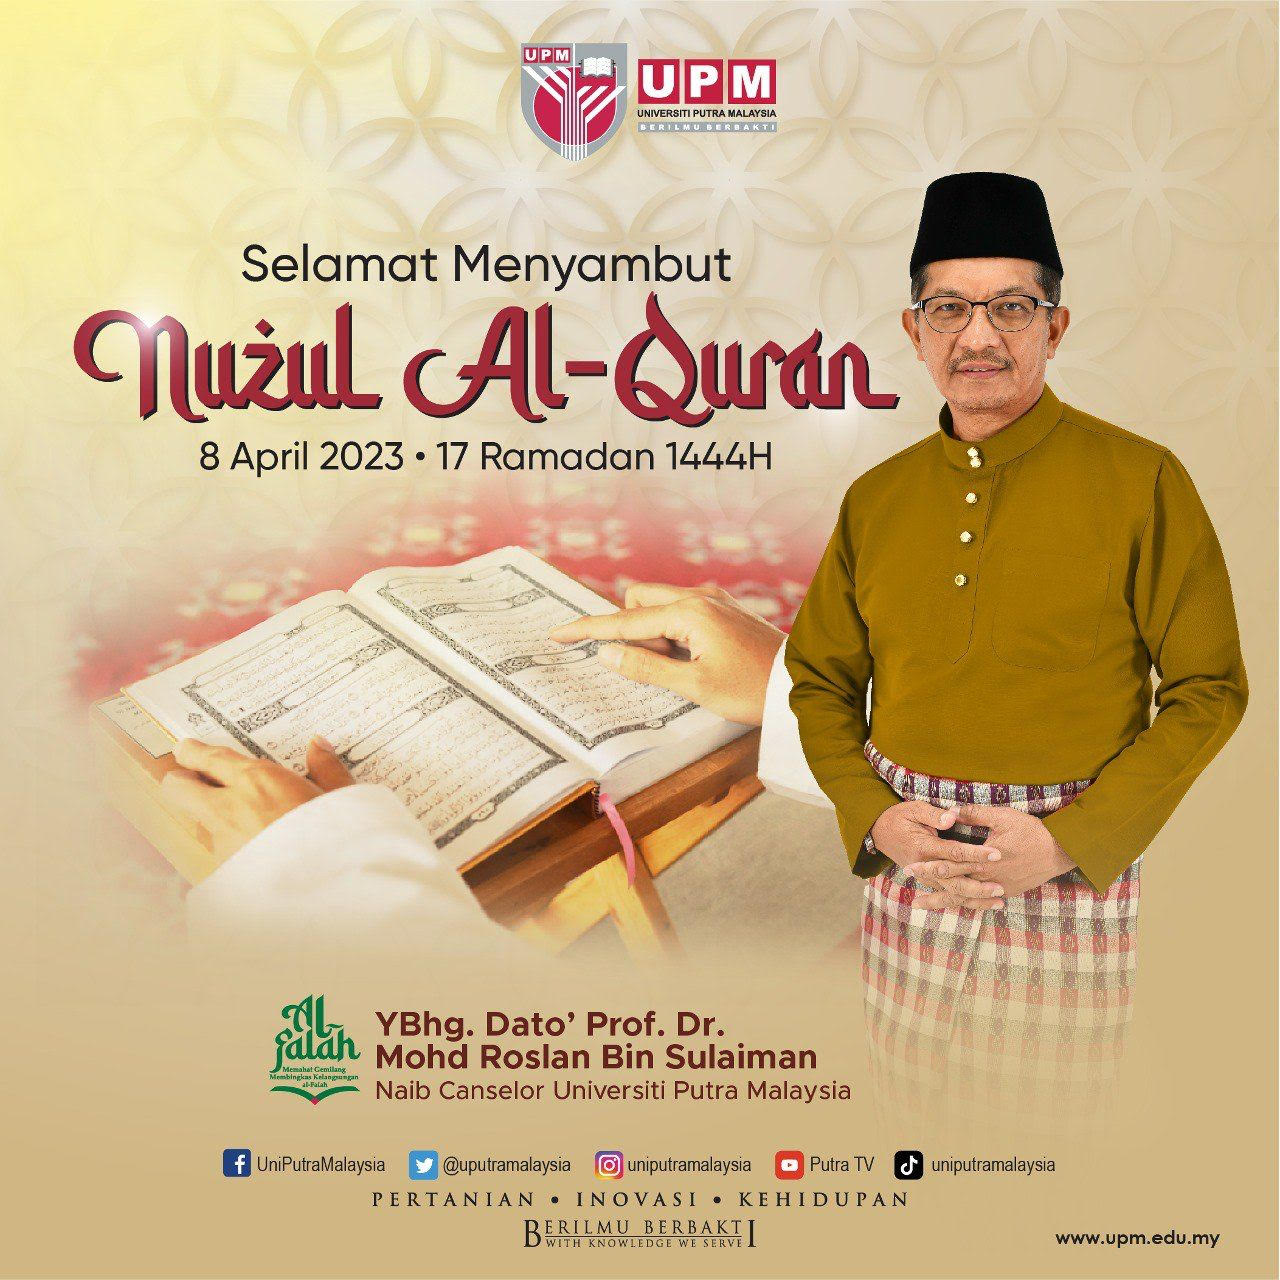 Appreciation and Ushering the Day of Nuzul al-Quran 1444H